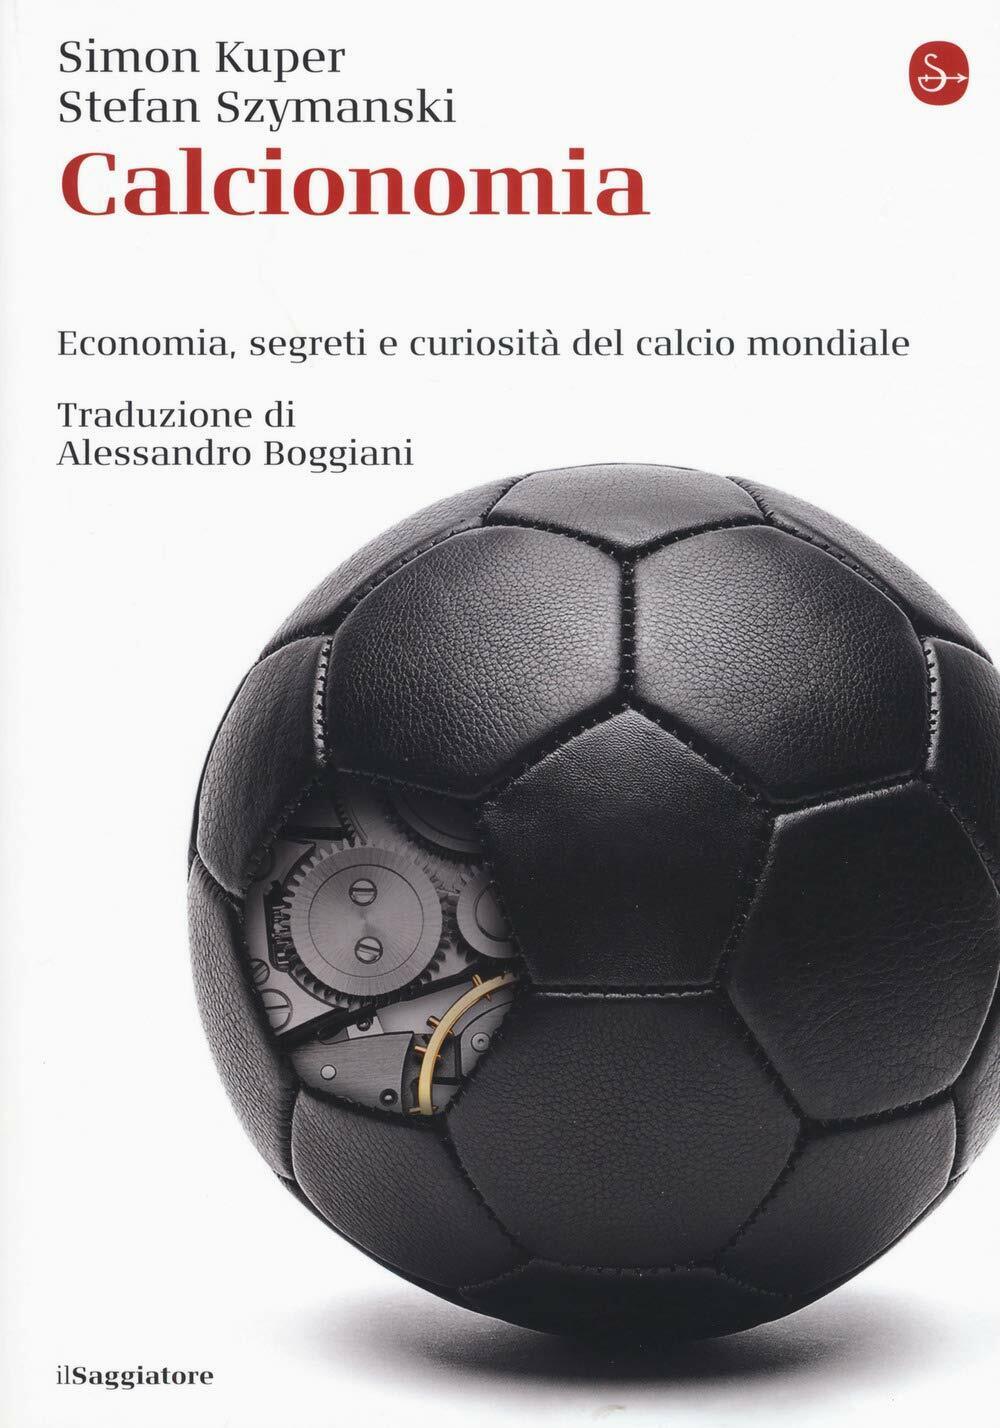 Calcionomia - Simon Kuper, Stefan Szymanski - Il Saggiatore, 2019 libro usato